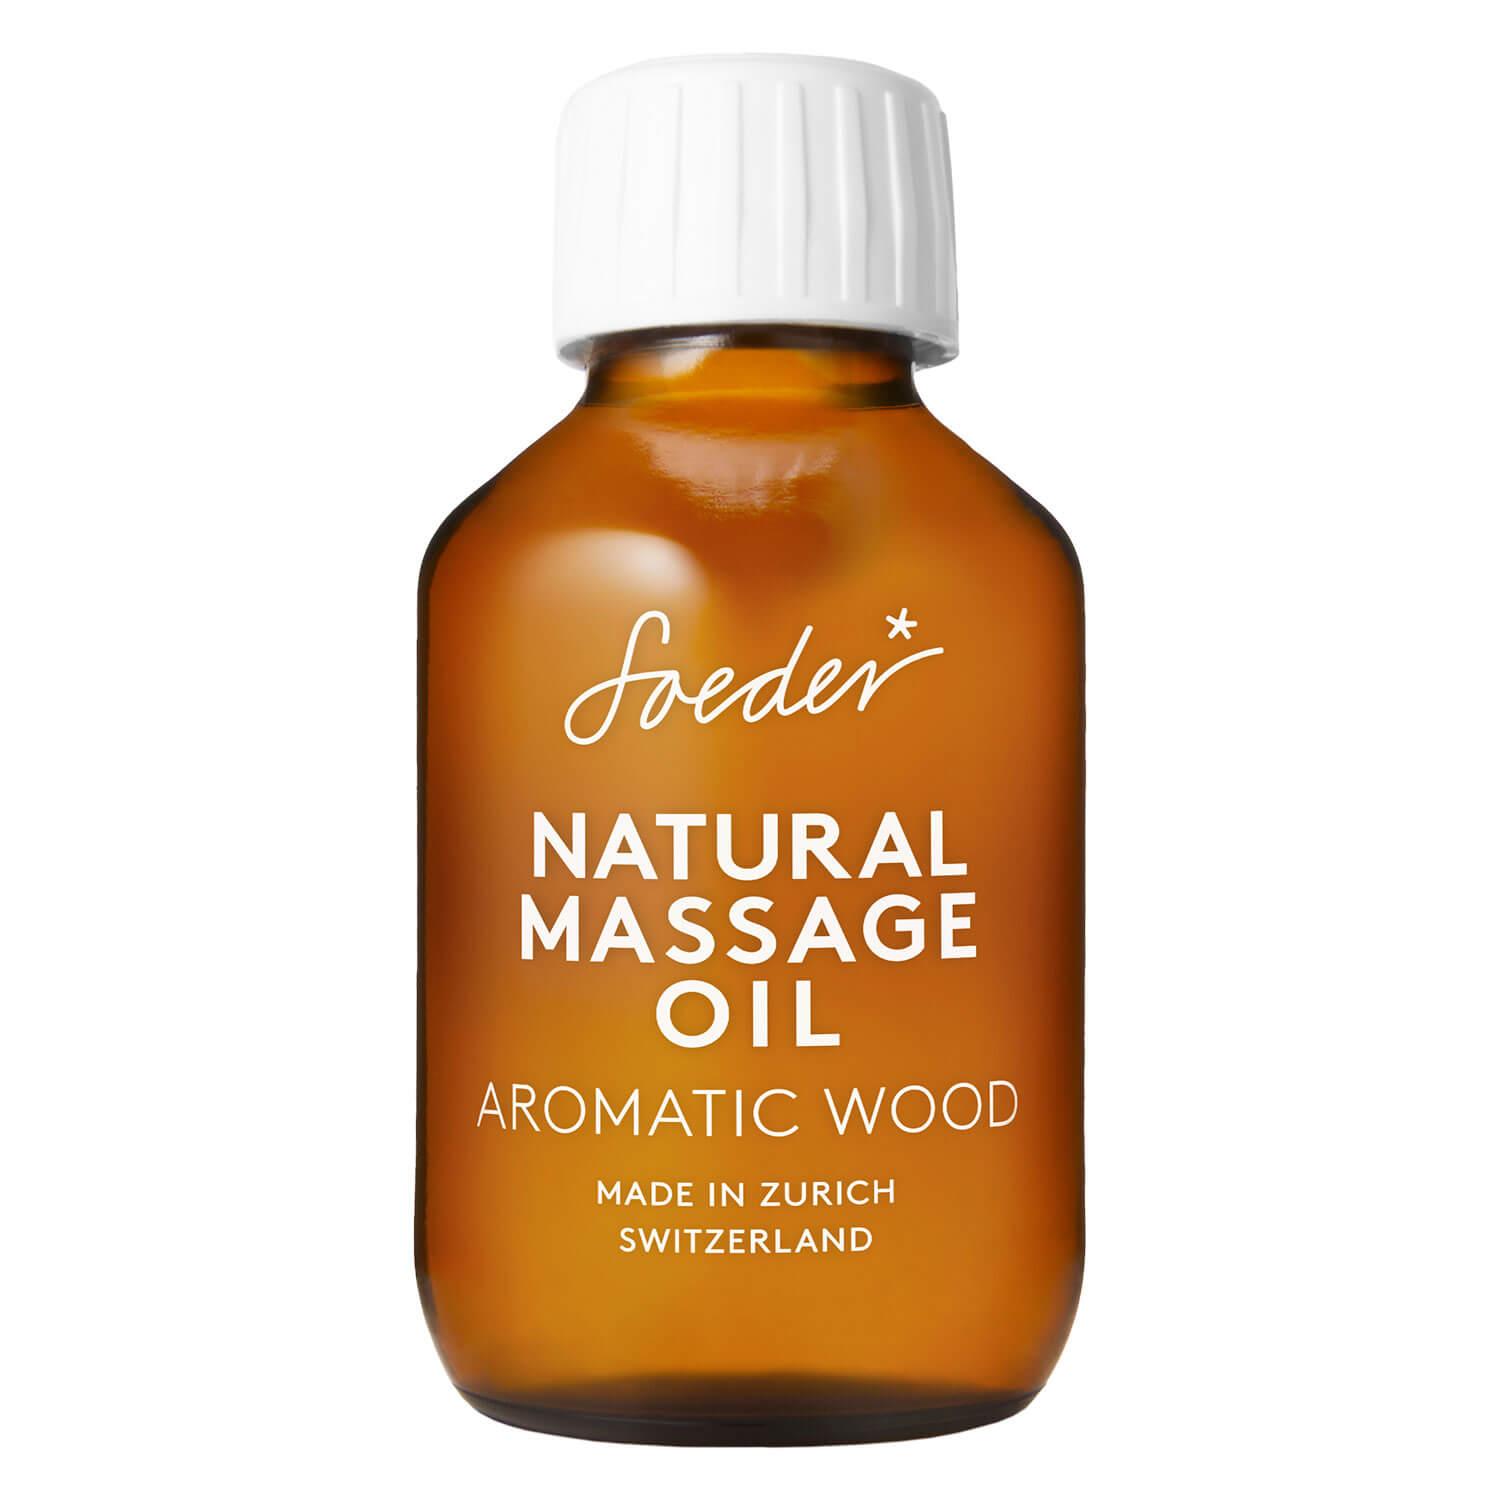 Soeder - Natural Massage Oil Aromatic Wood